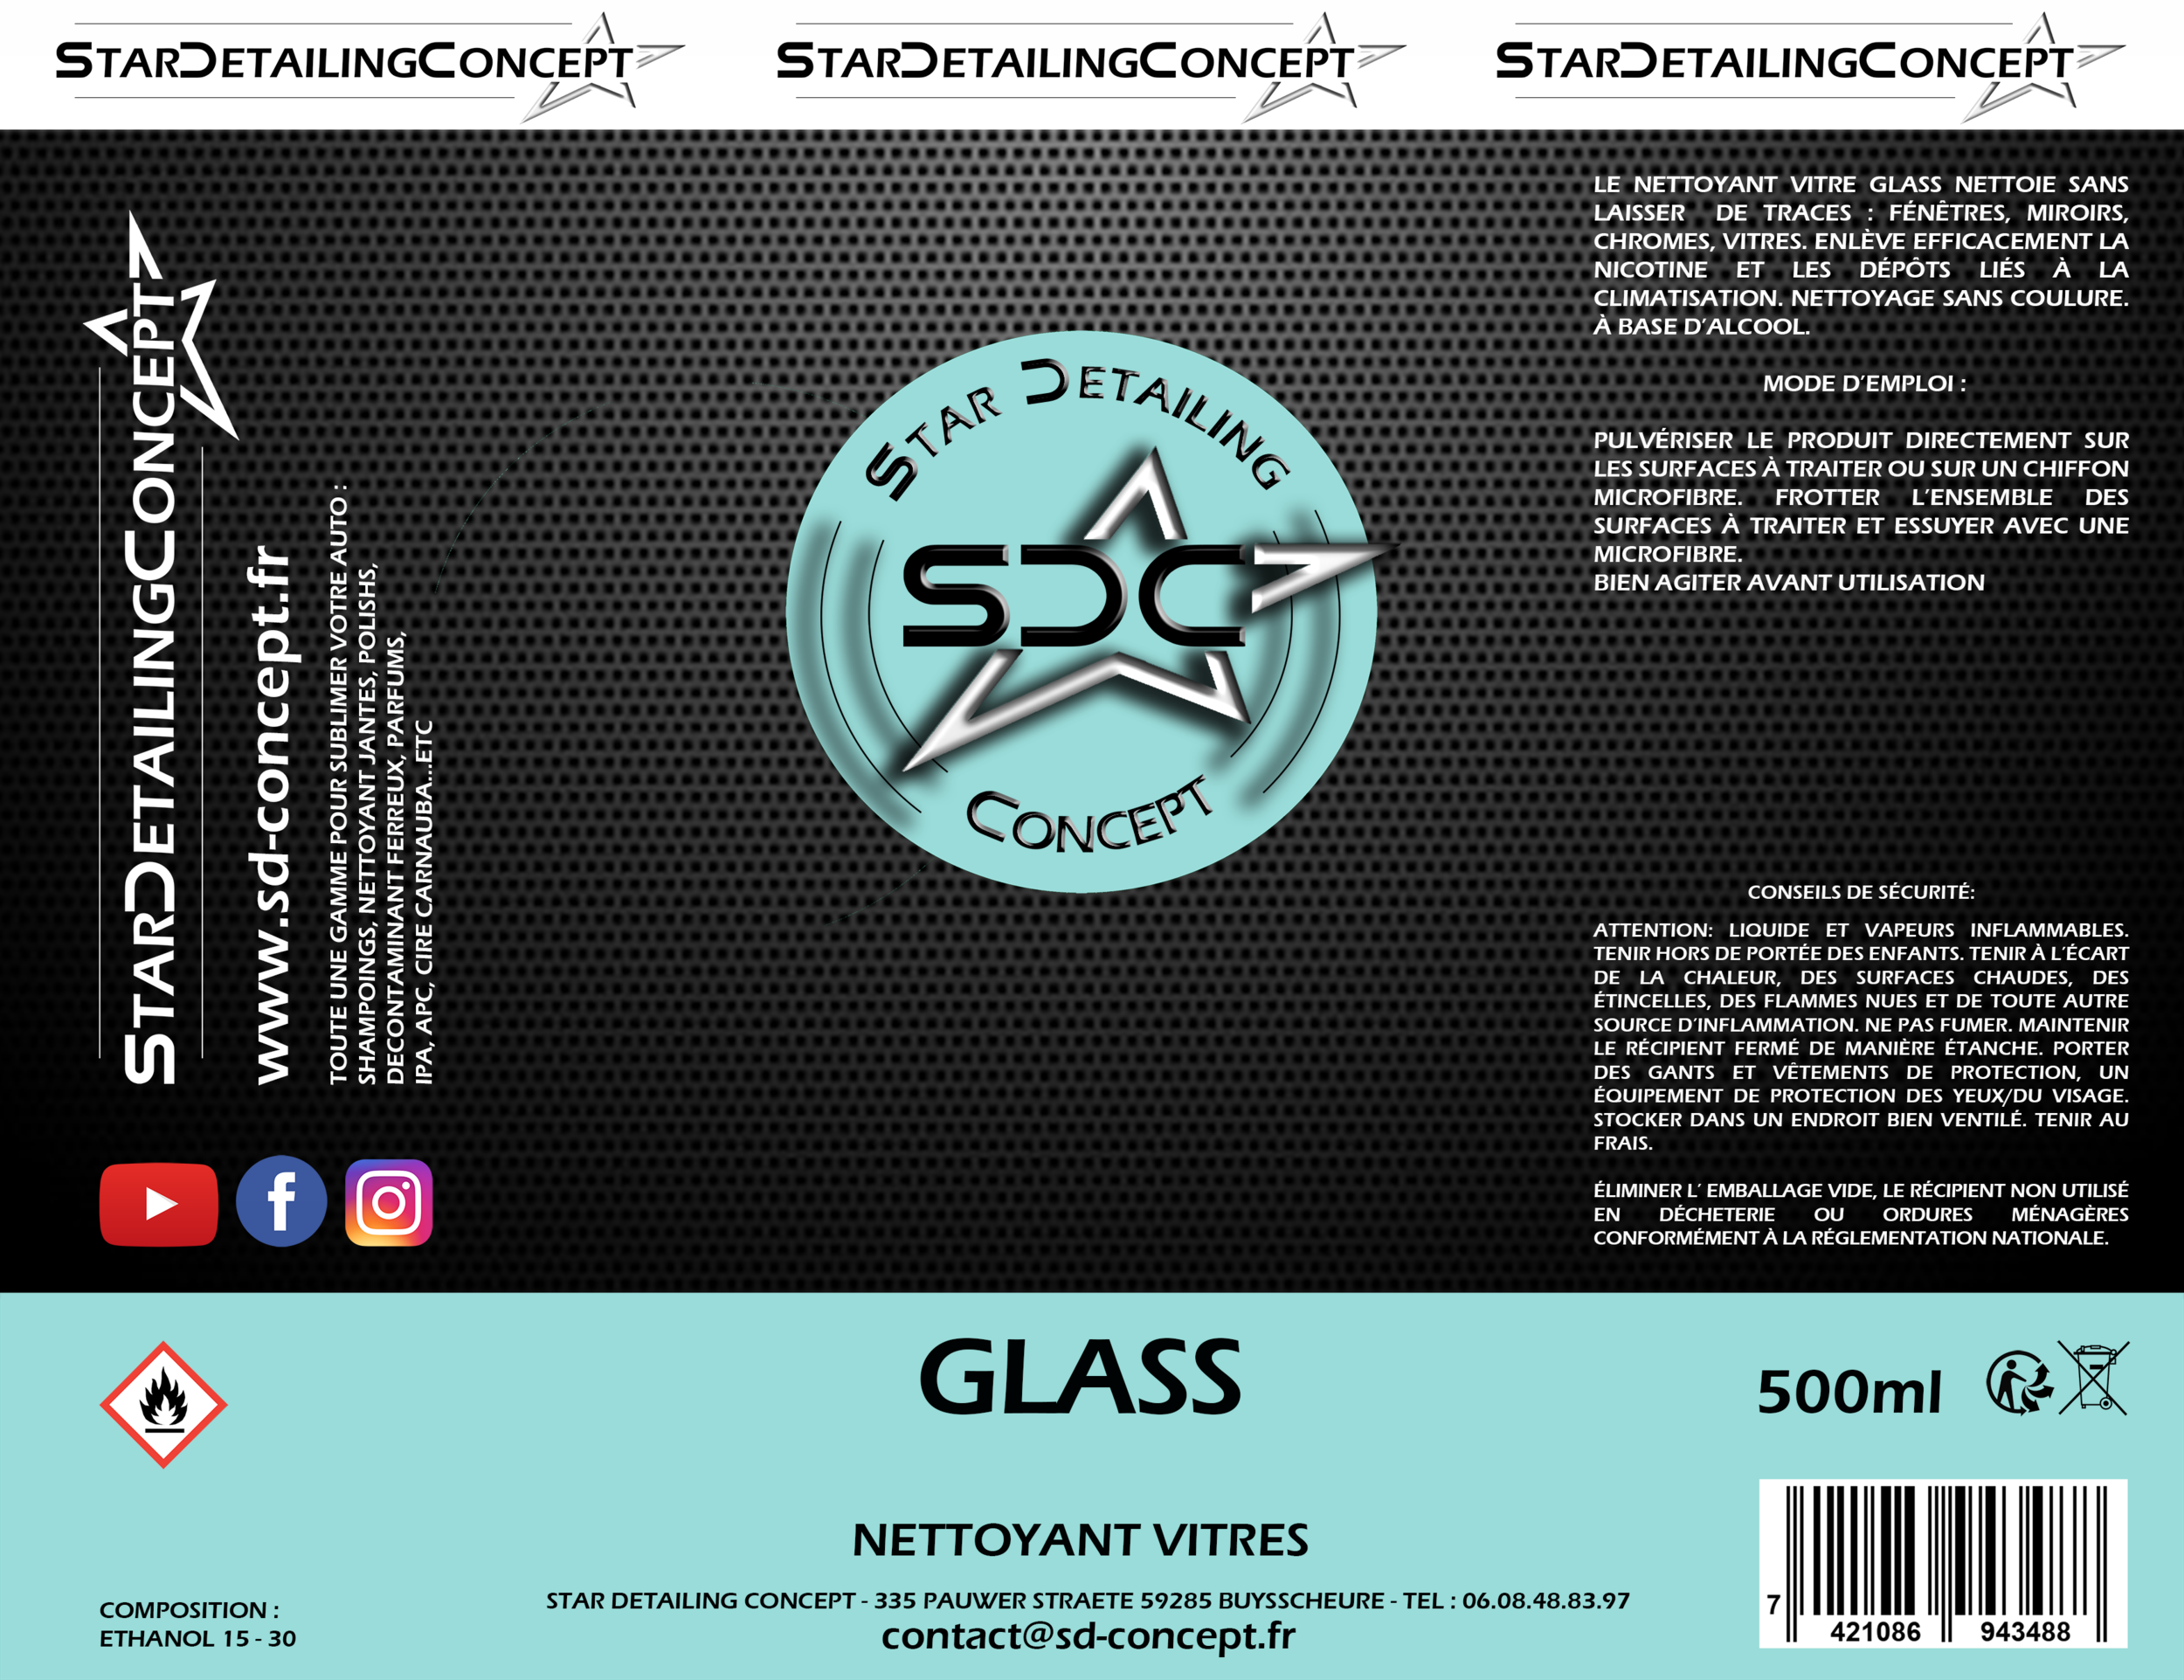 1 GLASS NETTOYANT VITRES OK 25 04 21